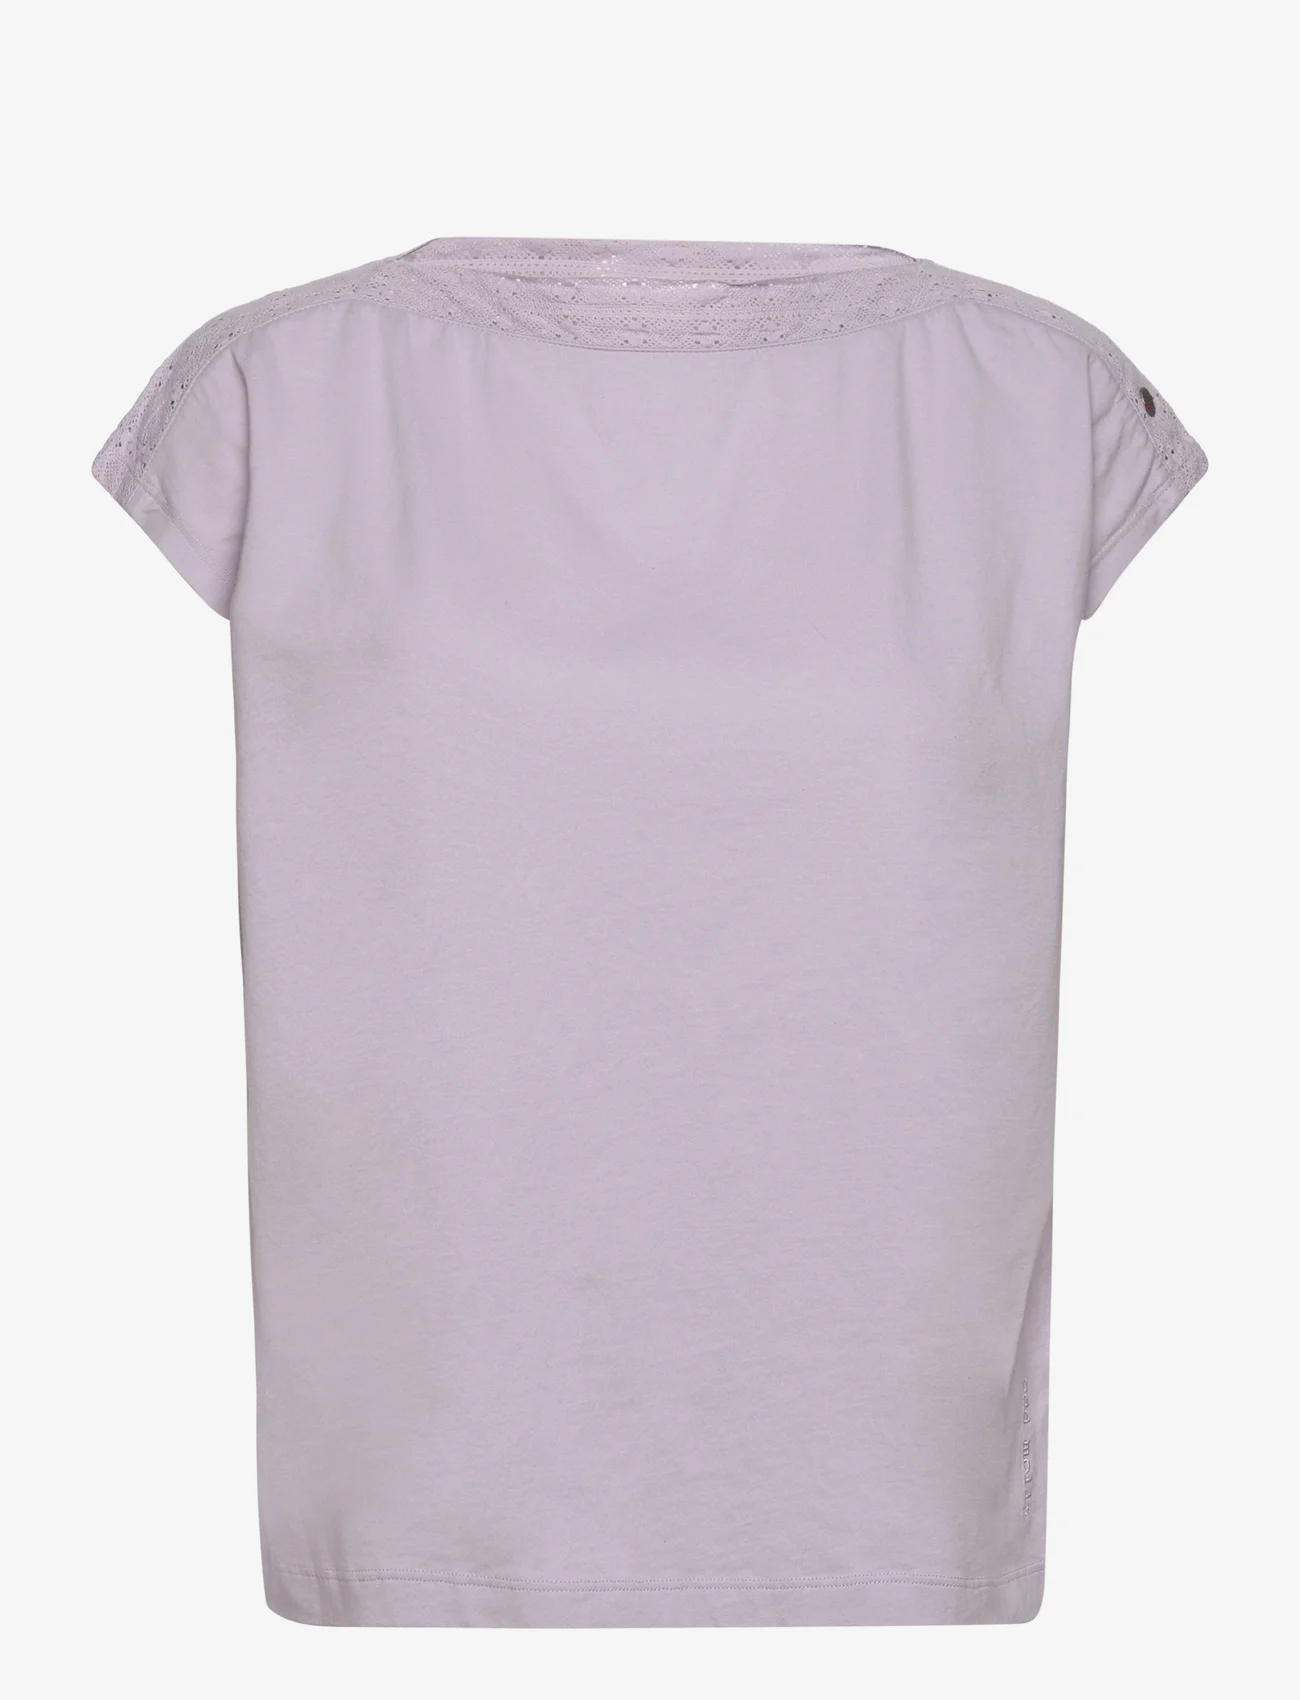 ODD MOLLY - Gracie Top - t-shirty & zopy - soft lilac - 0